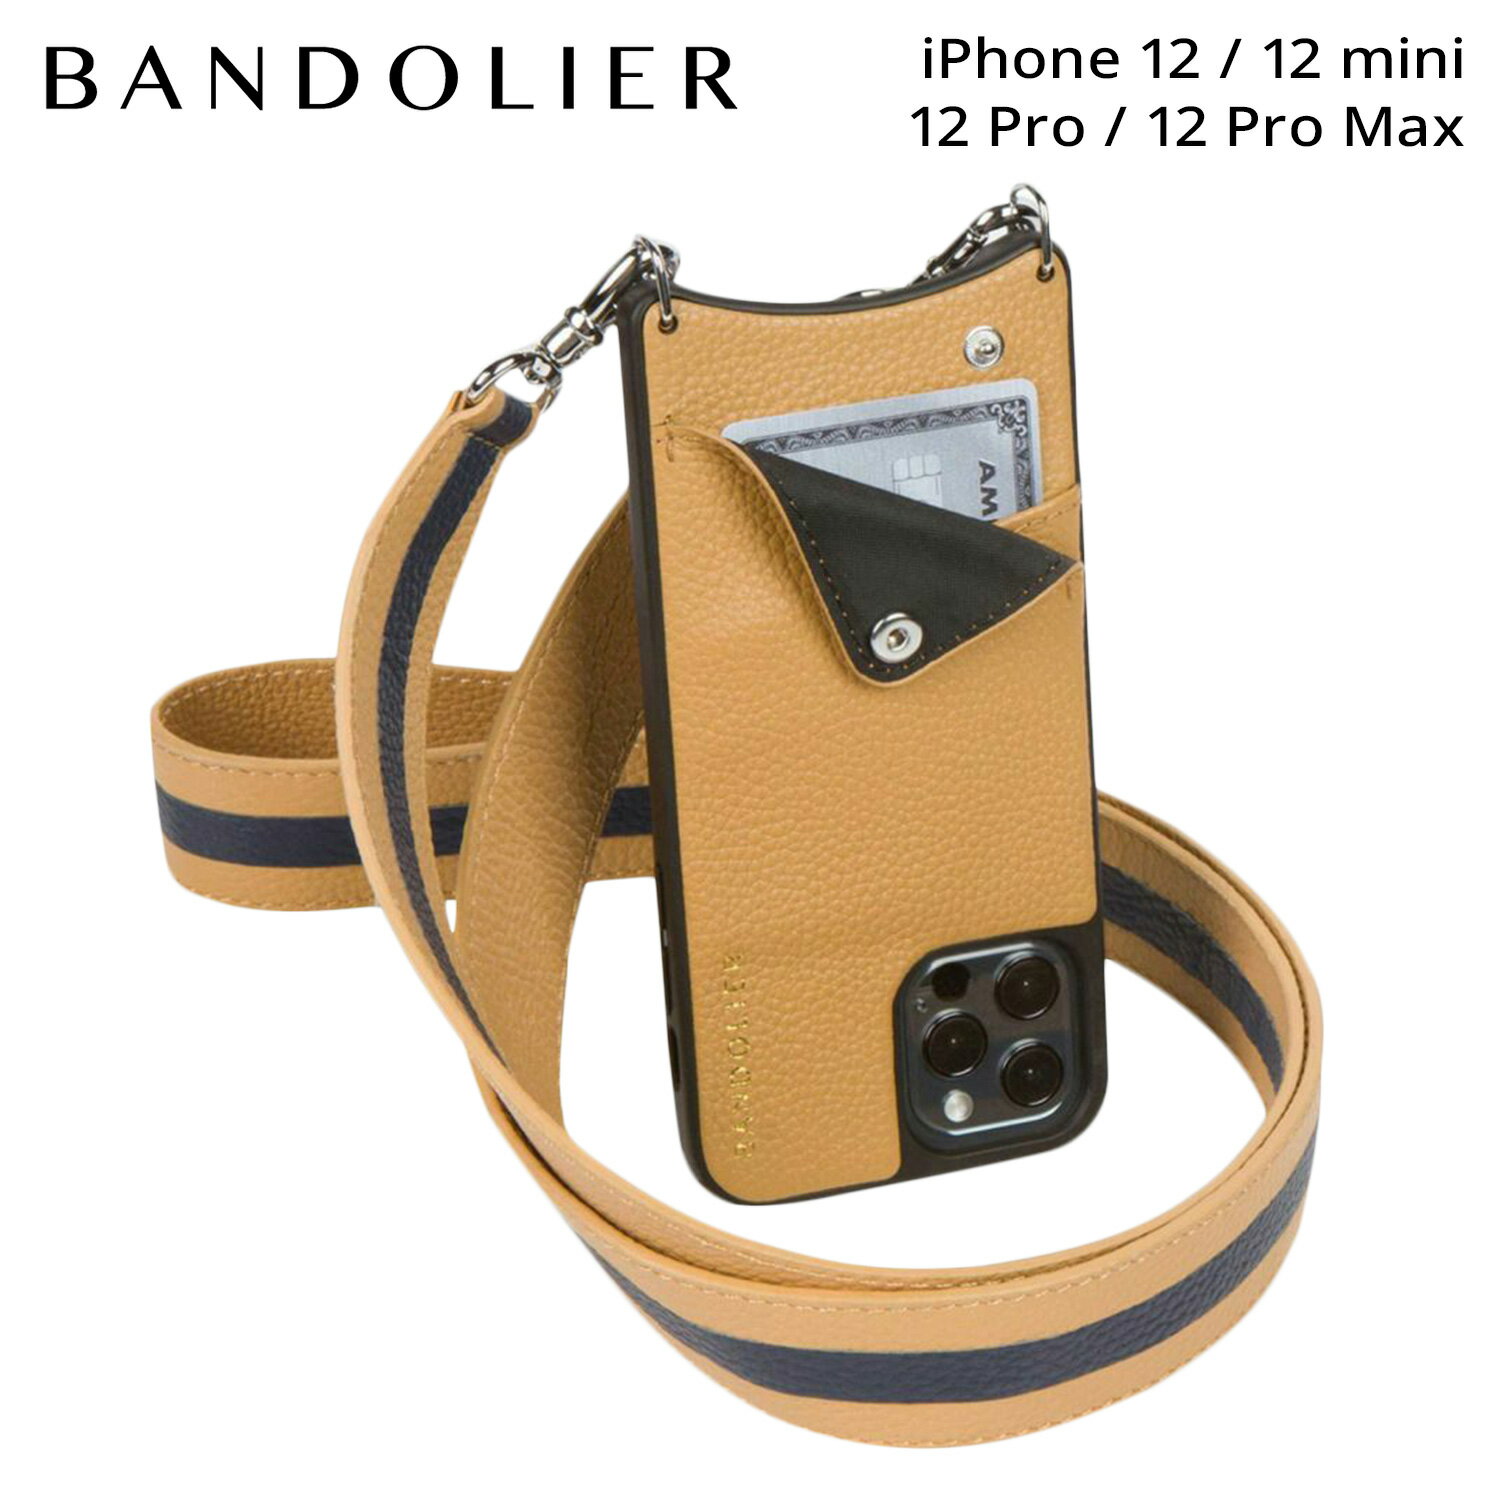 BANDOLIER ANGELA GOLDENROD バンドリヤー iPhone 12 mini iPhone 12 12Pro iPhone 12 Pro Max ケース スマホケース 携帯 ショルダー アイフォン アンジェラ メンズ レディース ベージュ 10AGL